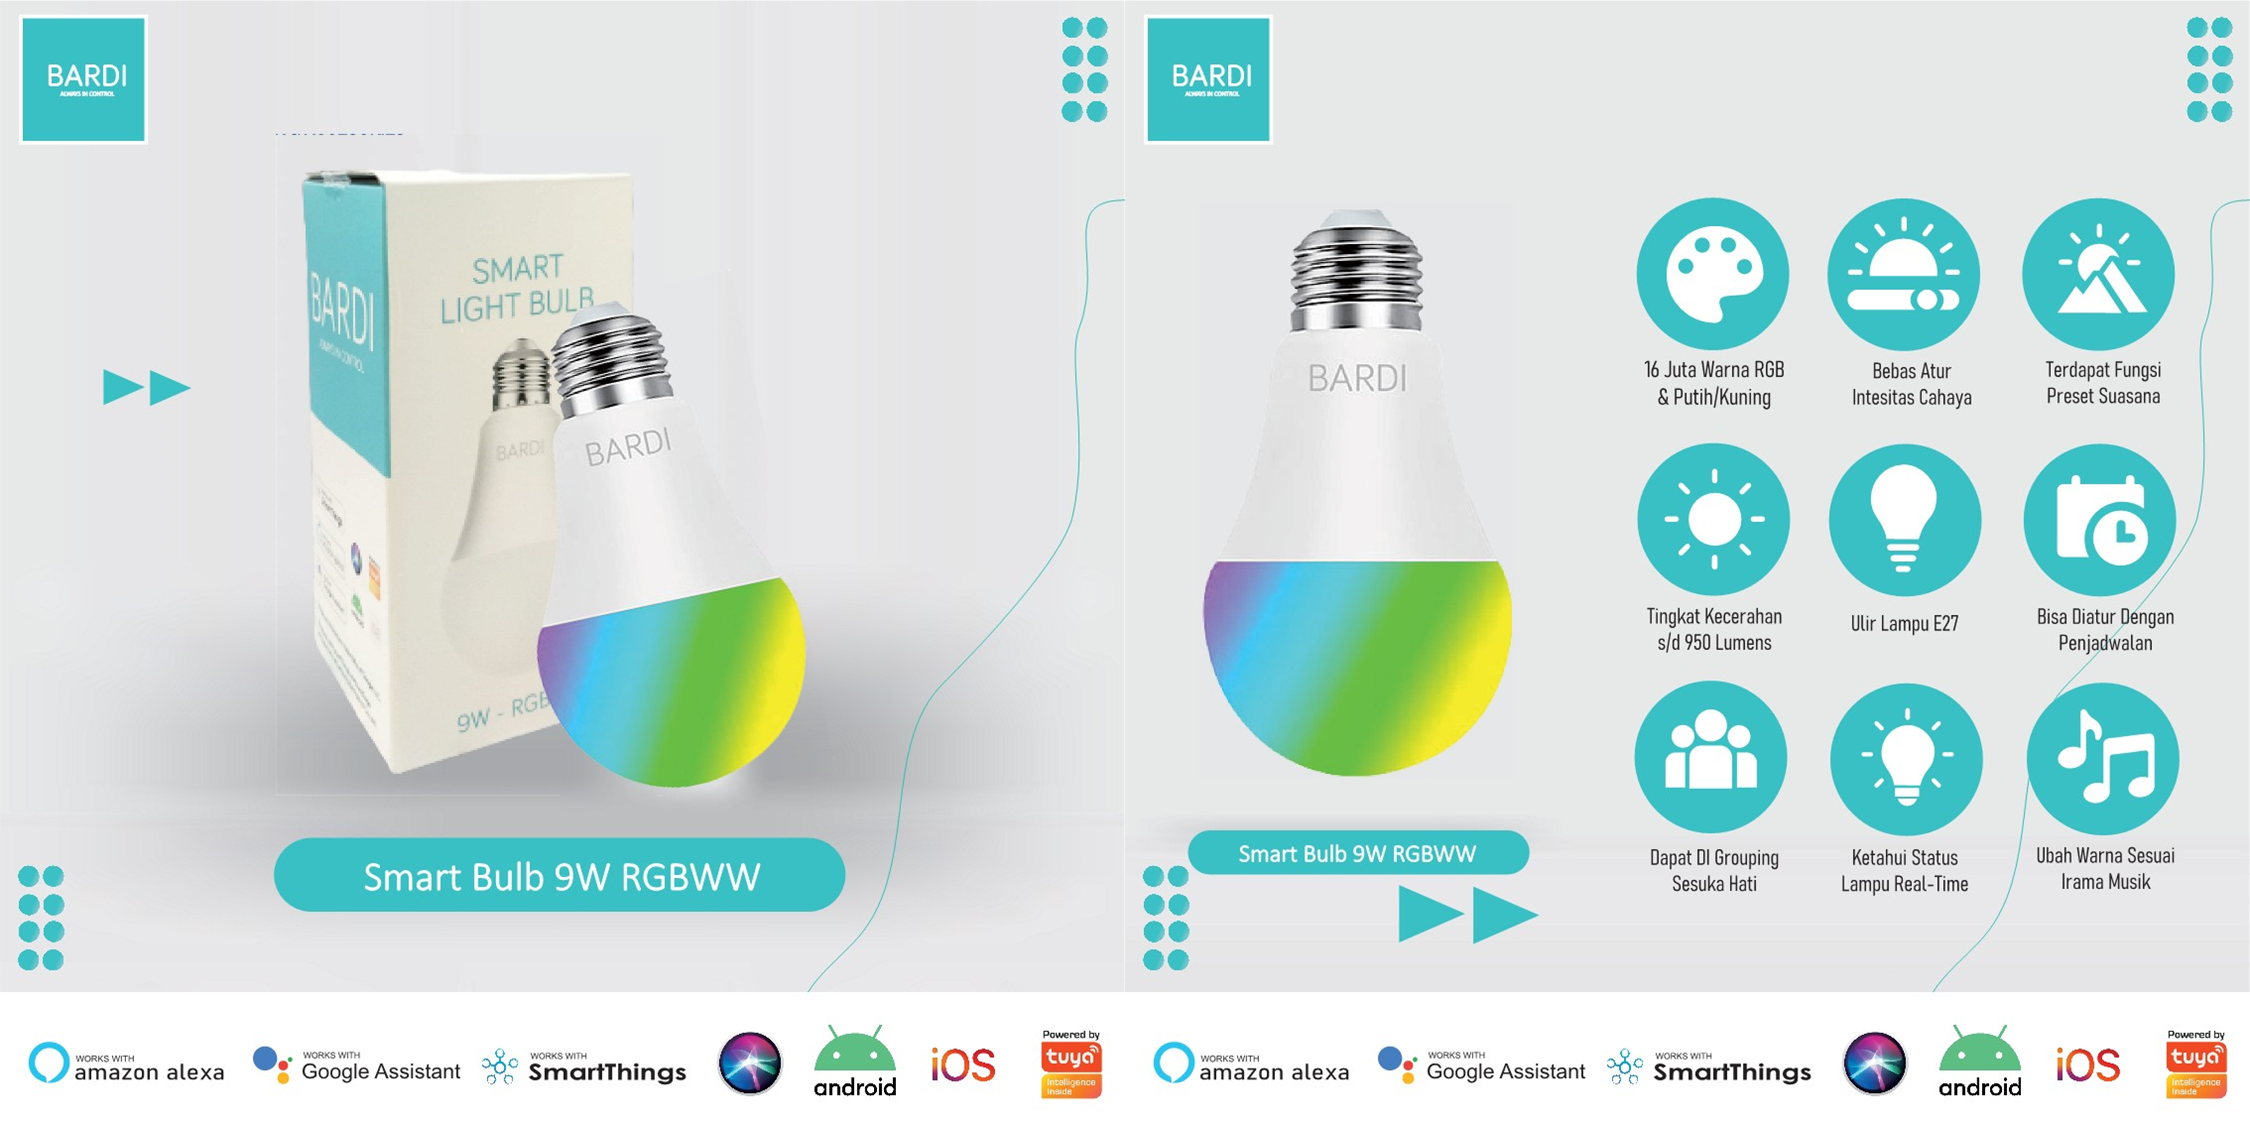 BARDI Smart Light Bulb 9W RGBWW: Lampu Pintar Hemat Energi dengan 16 juta warna